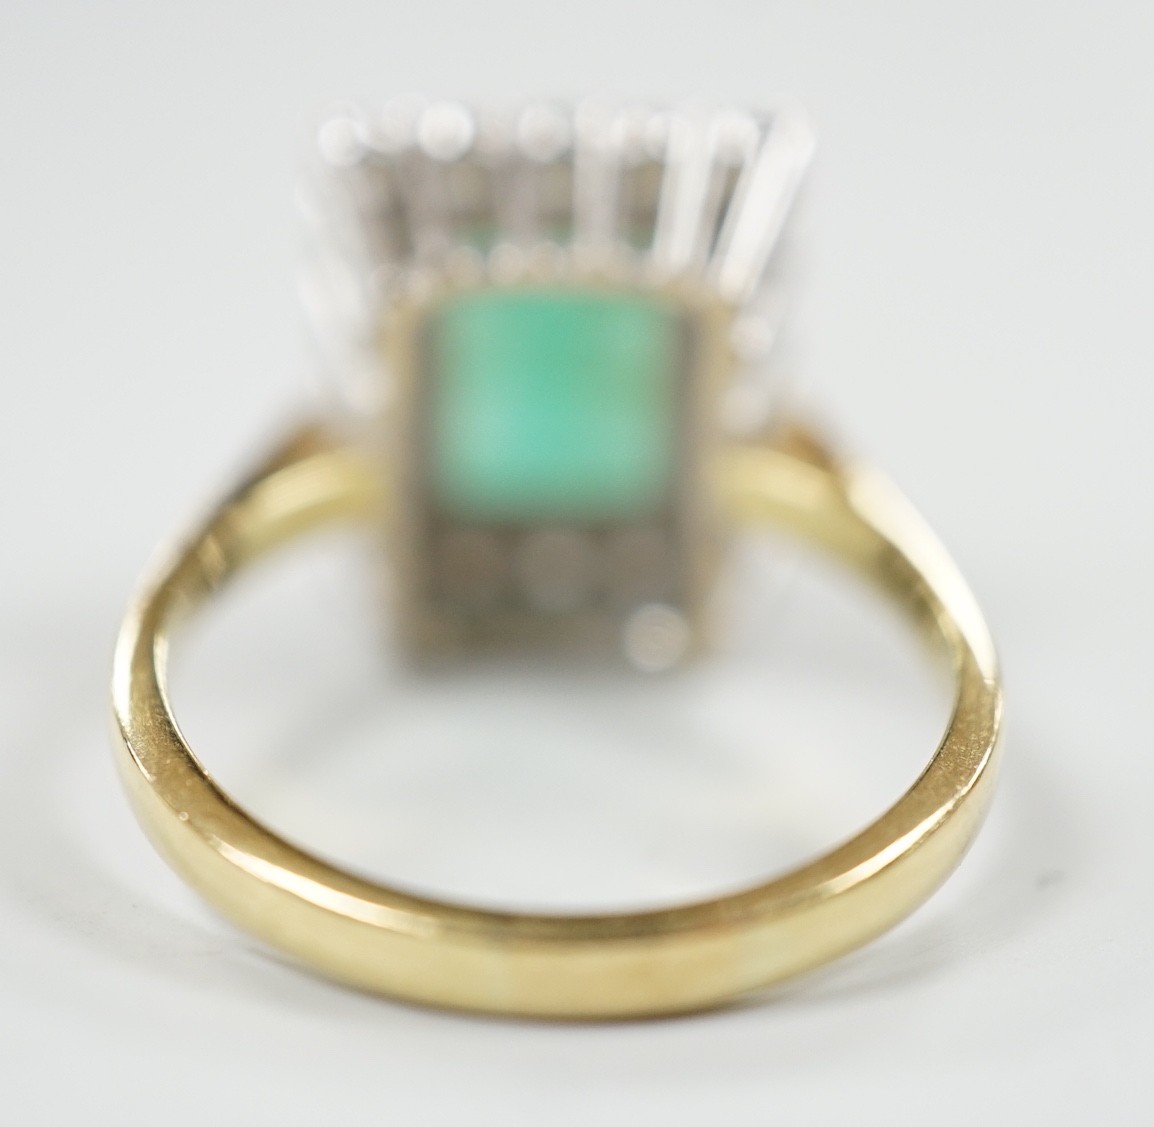 A modern 18ct gold, emerald and diamond set rectangular cluster ring, size Q, gross weight 6.4 grams.